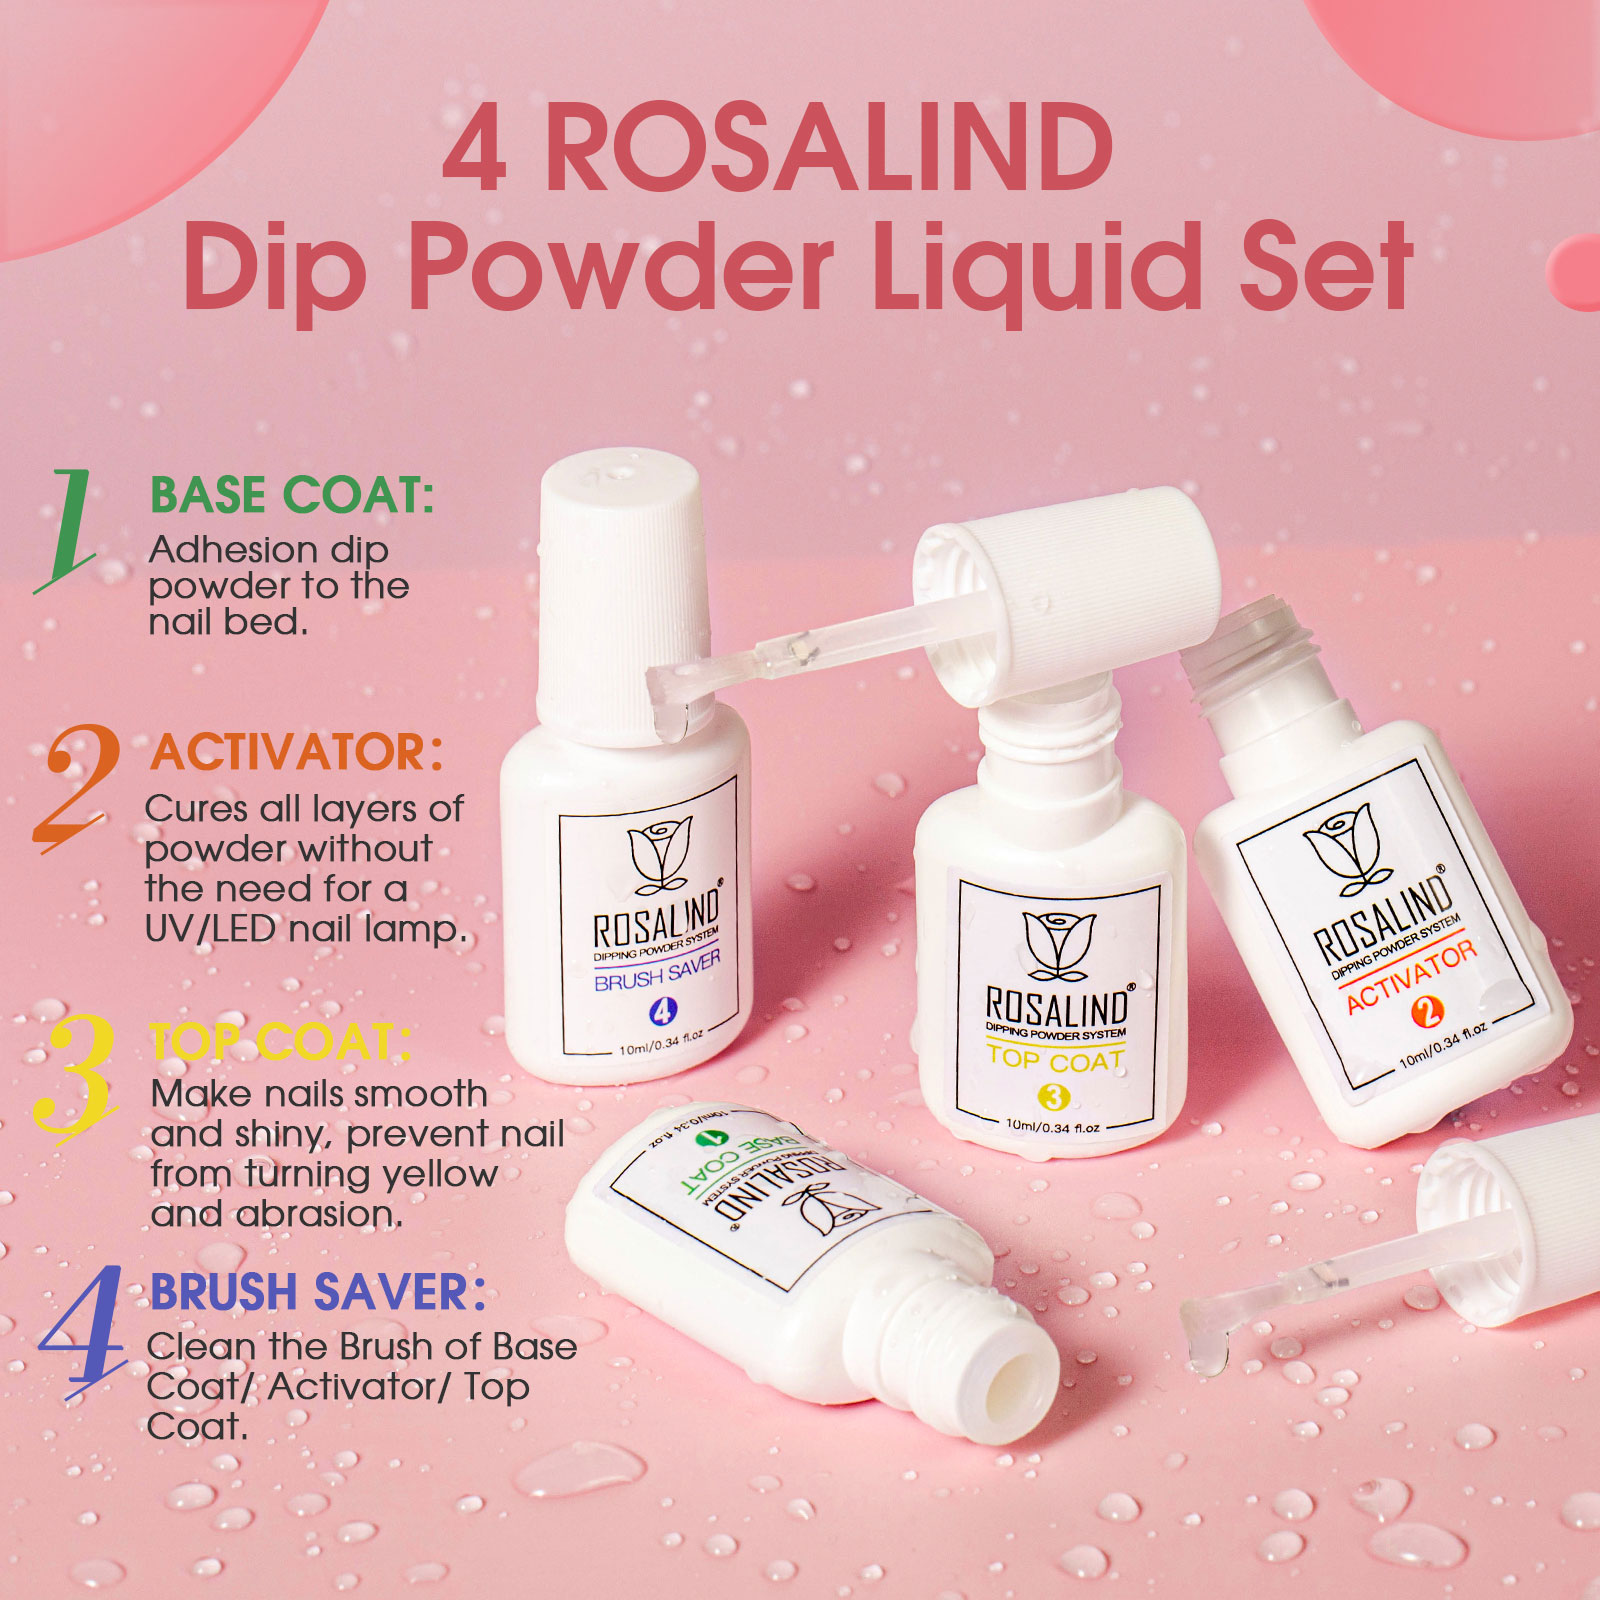 ROSALIND cross-border supply manicure infiltration powder sticky manicure glitter powder set color glue manicure supplies tools